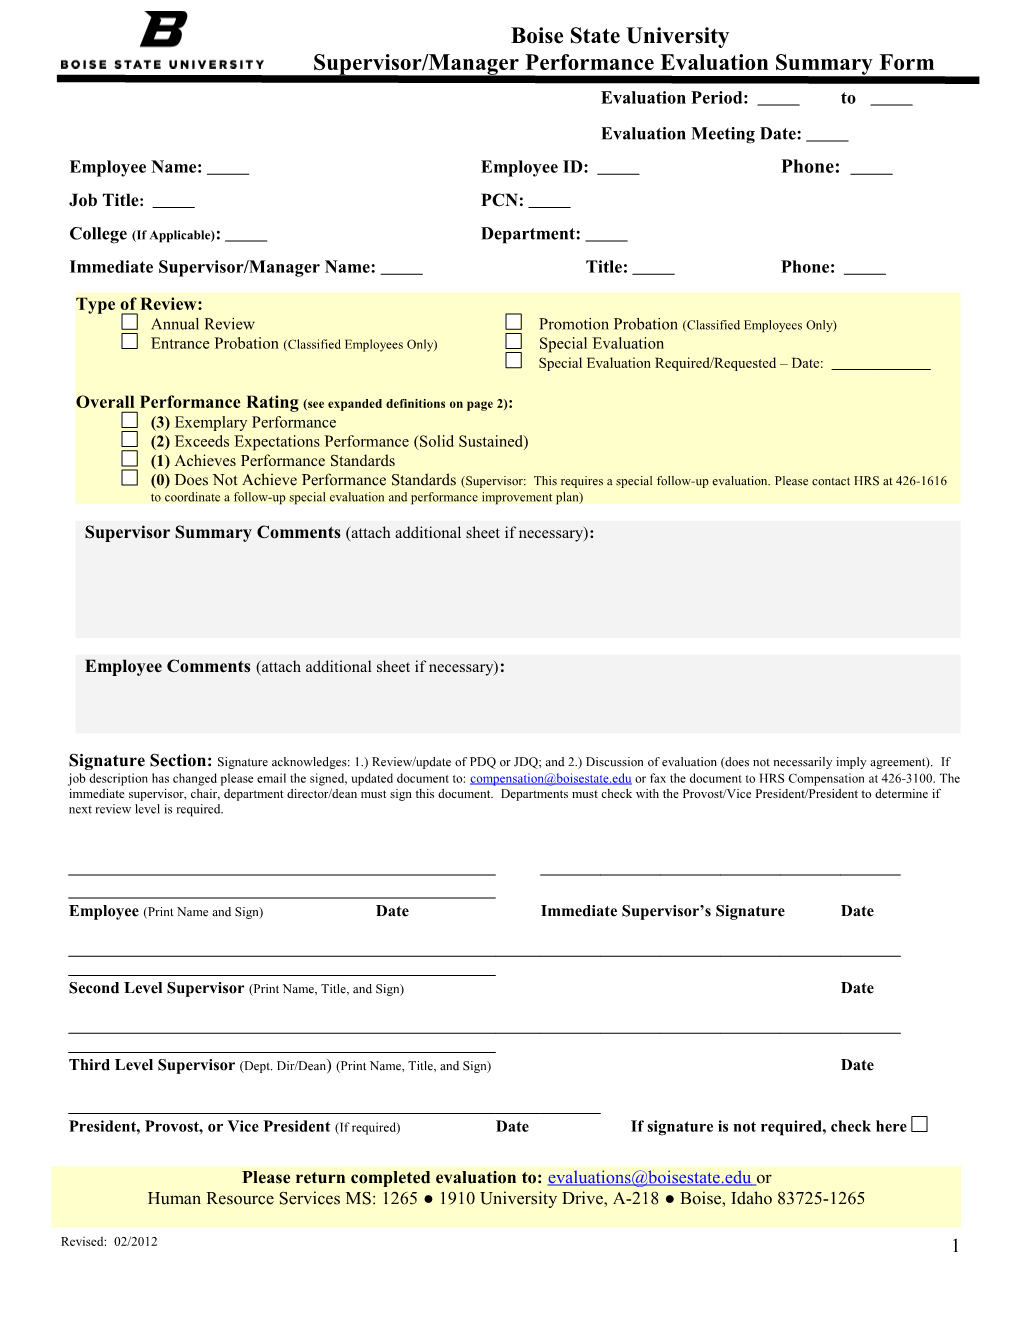 Supervisor/Manager Performance Evaluation Summary Form